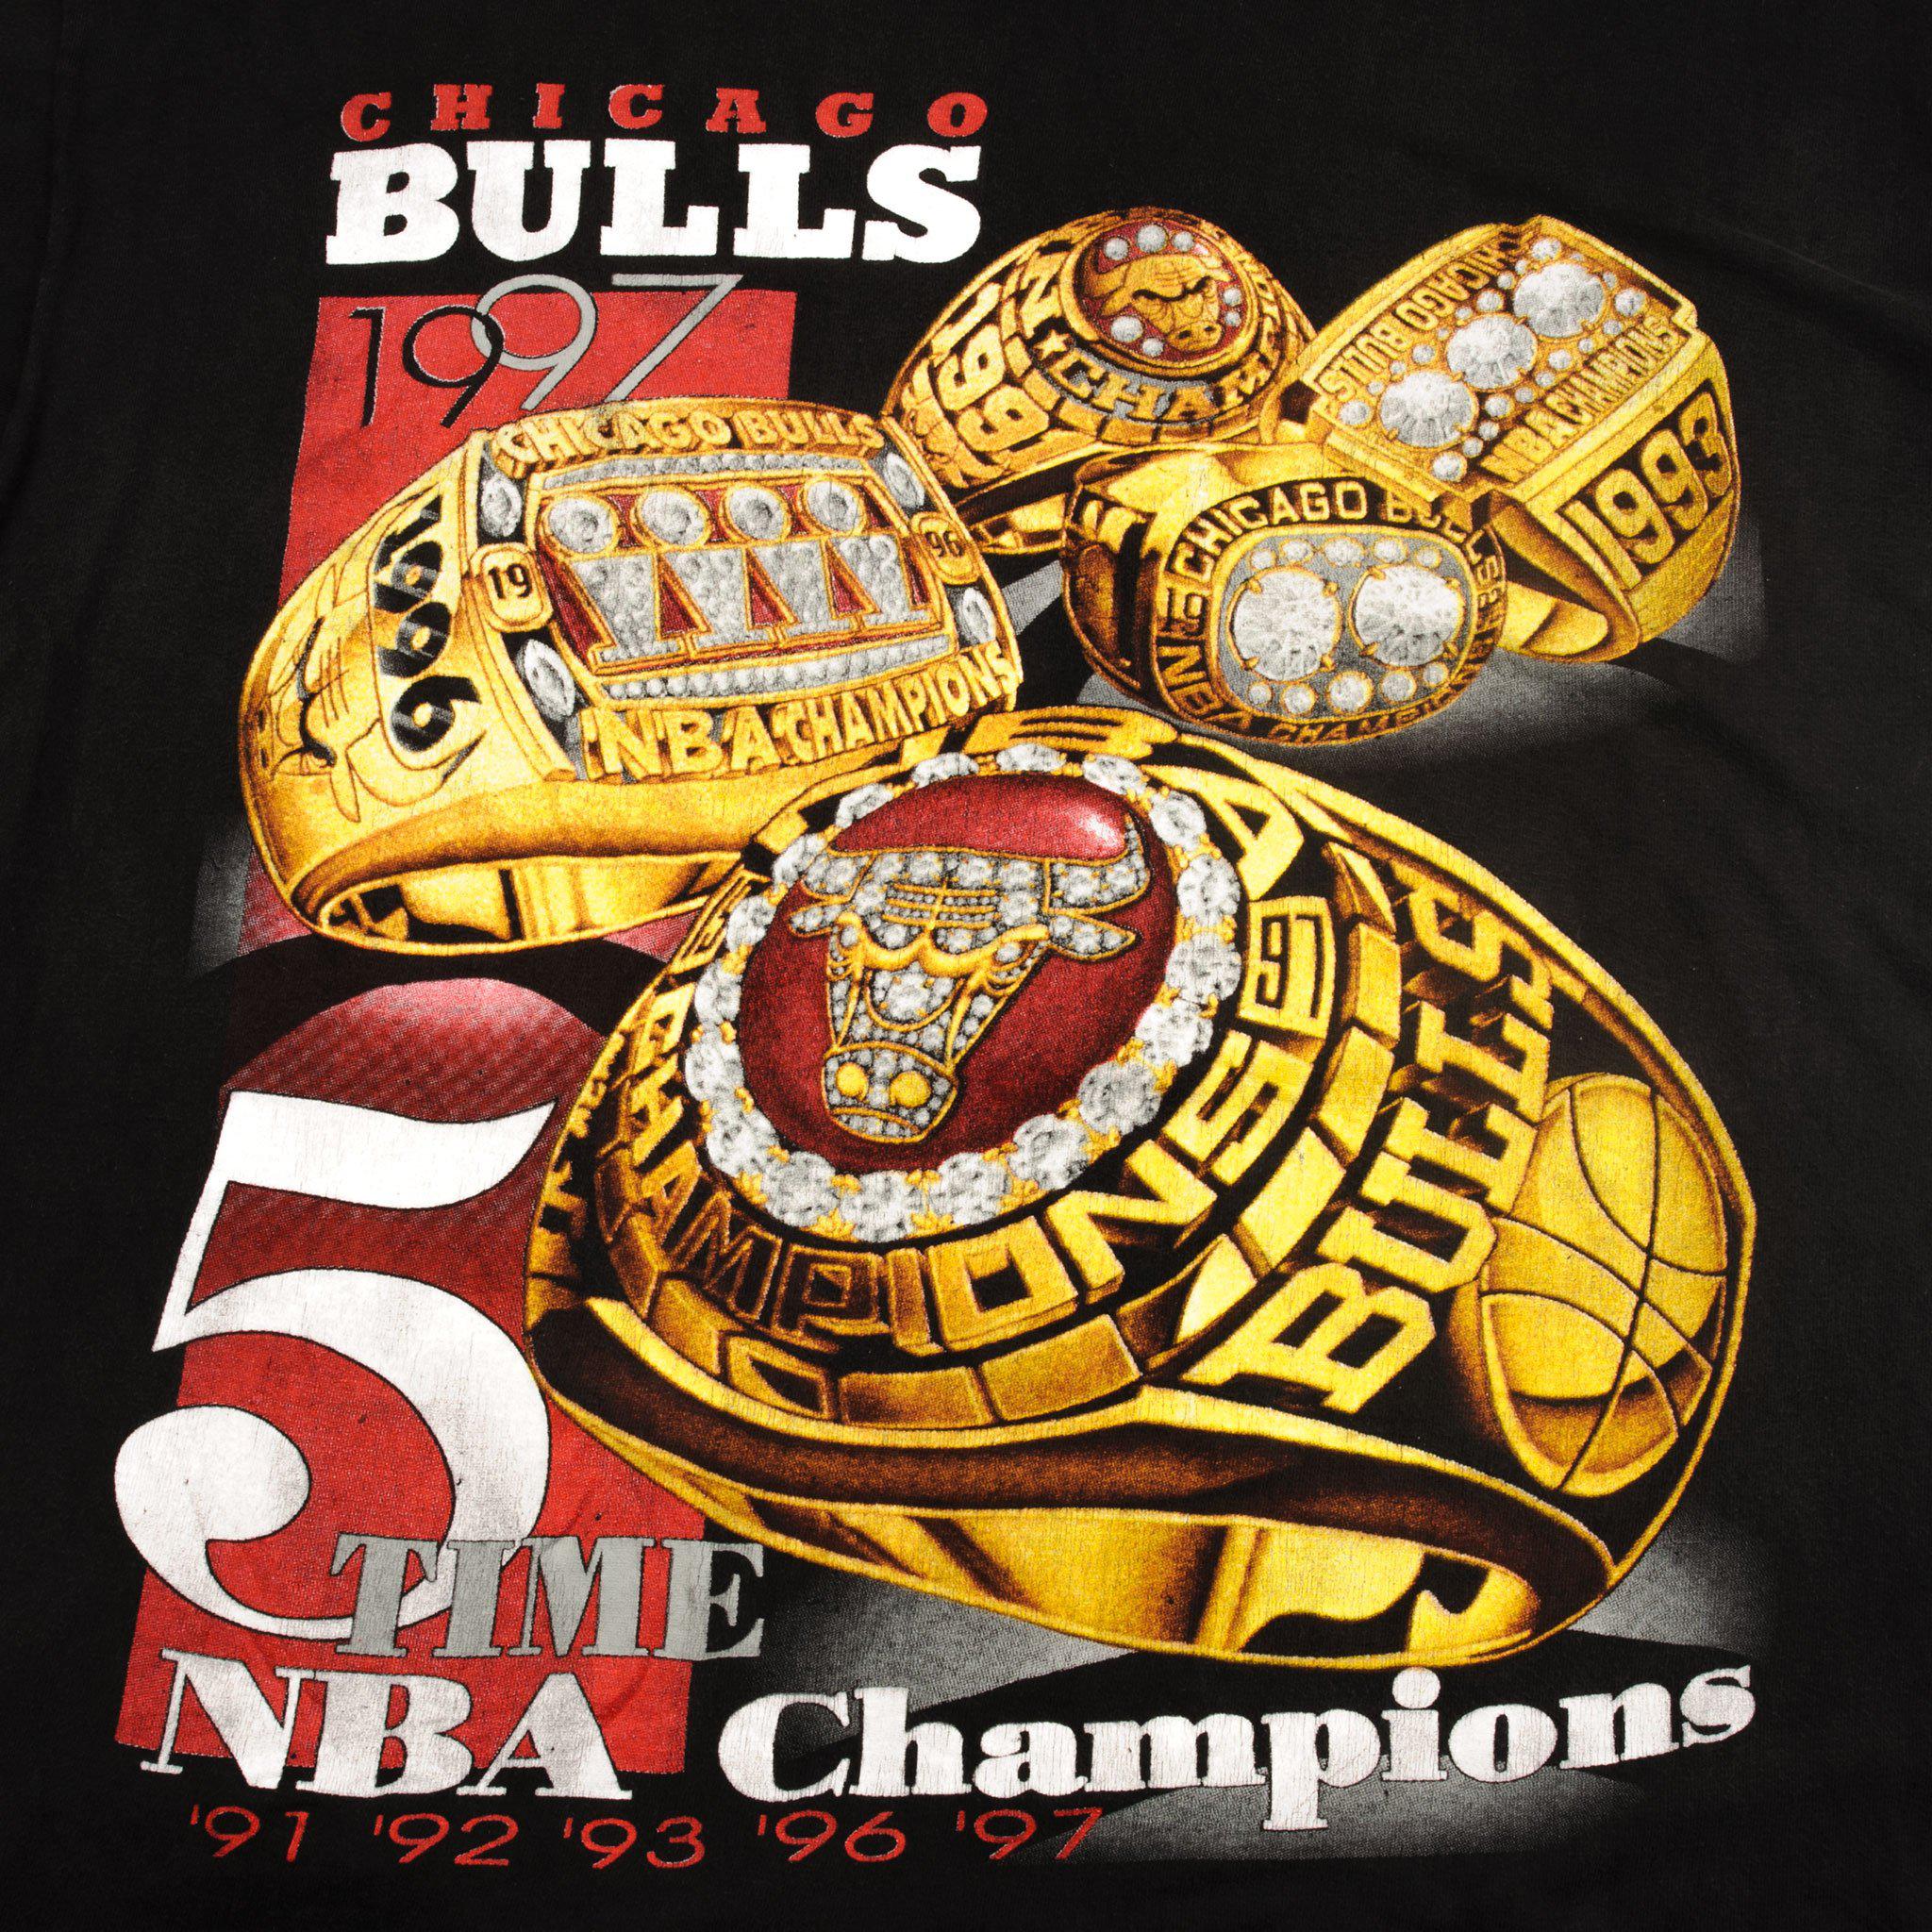 Chicago Bulls Champion Oversized T-Shirt